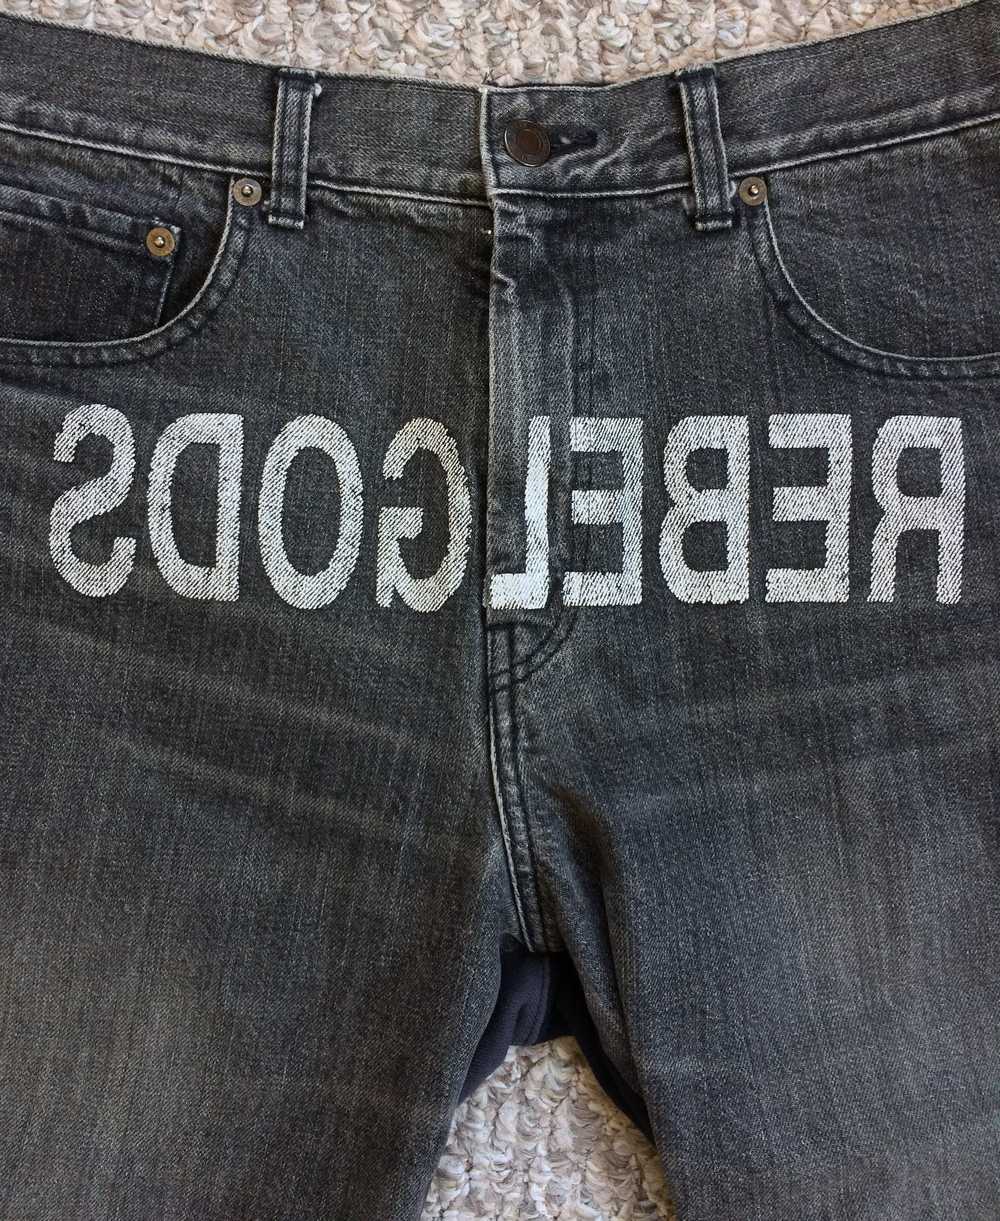 Undercover F/W 2003 Rebelgods Hybrid Pants - image 3